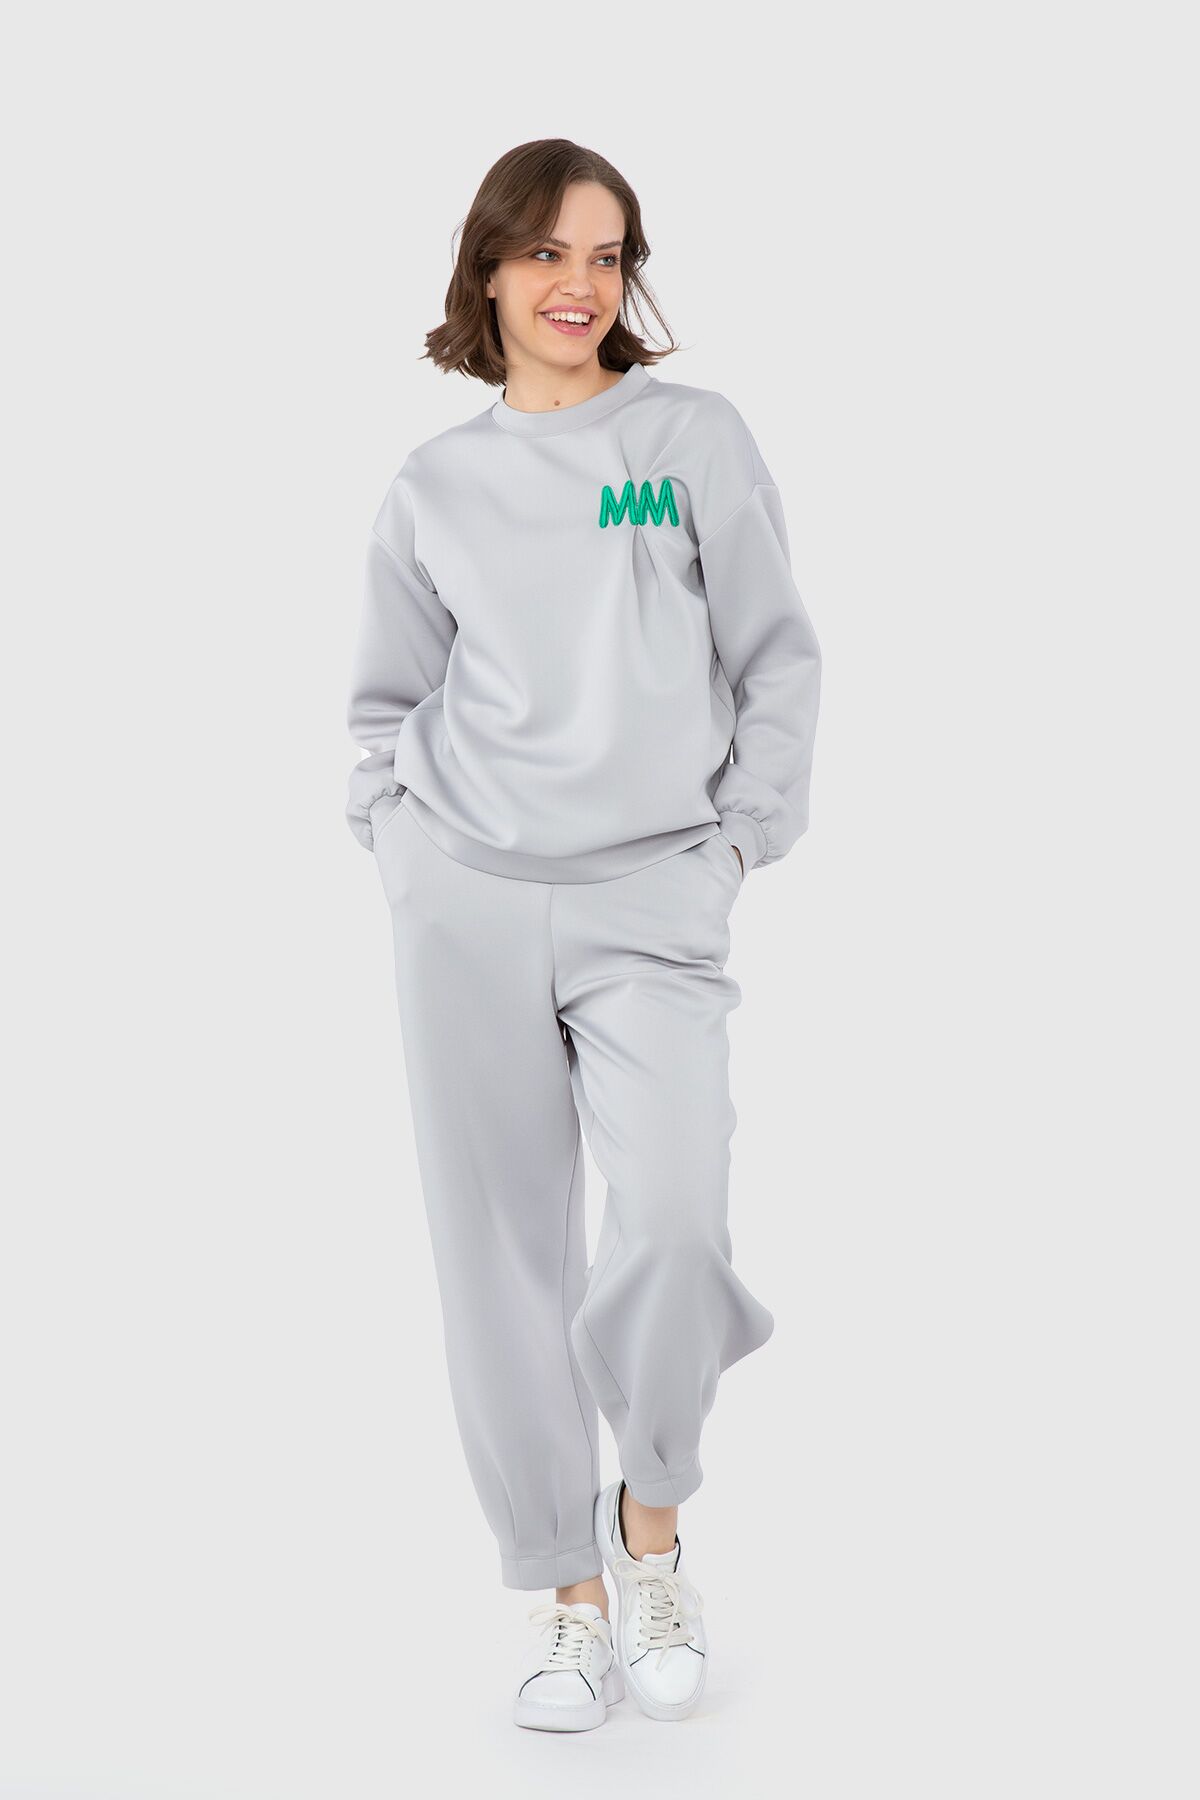 MANI MANI - Nakış Ve Pili Detaylı Sweatshirt